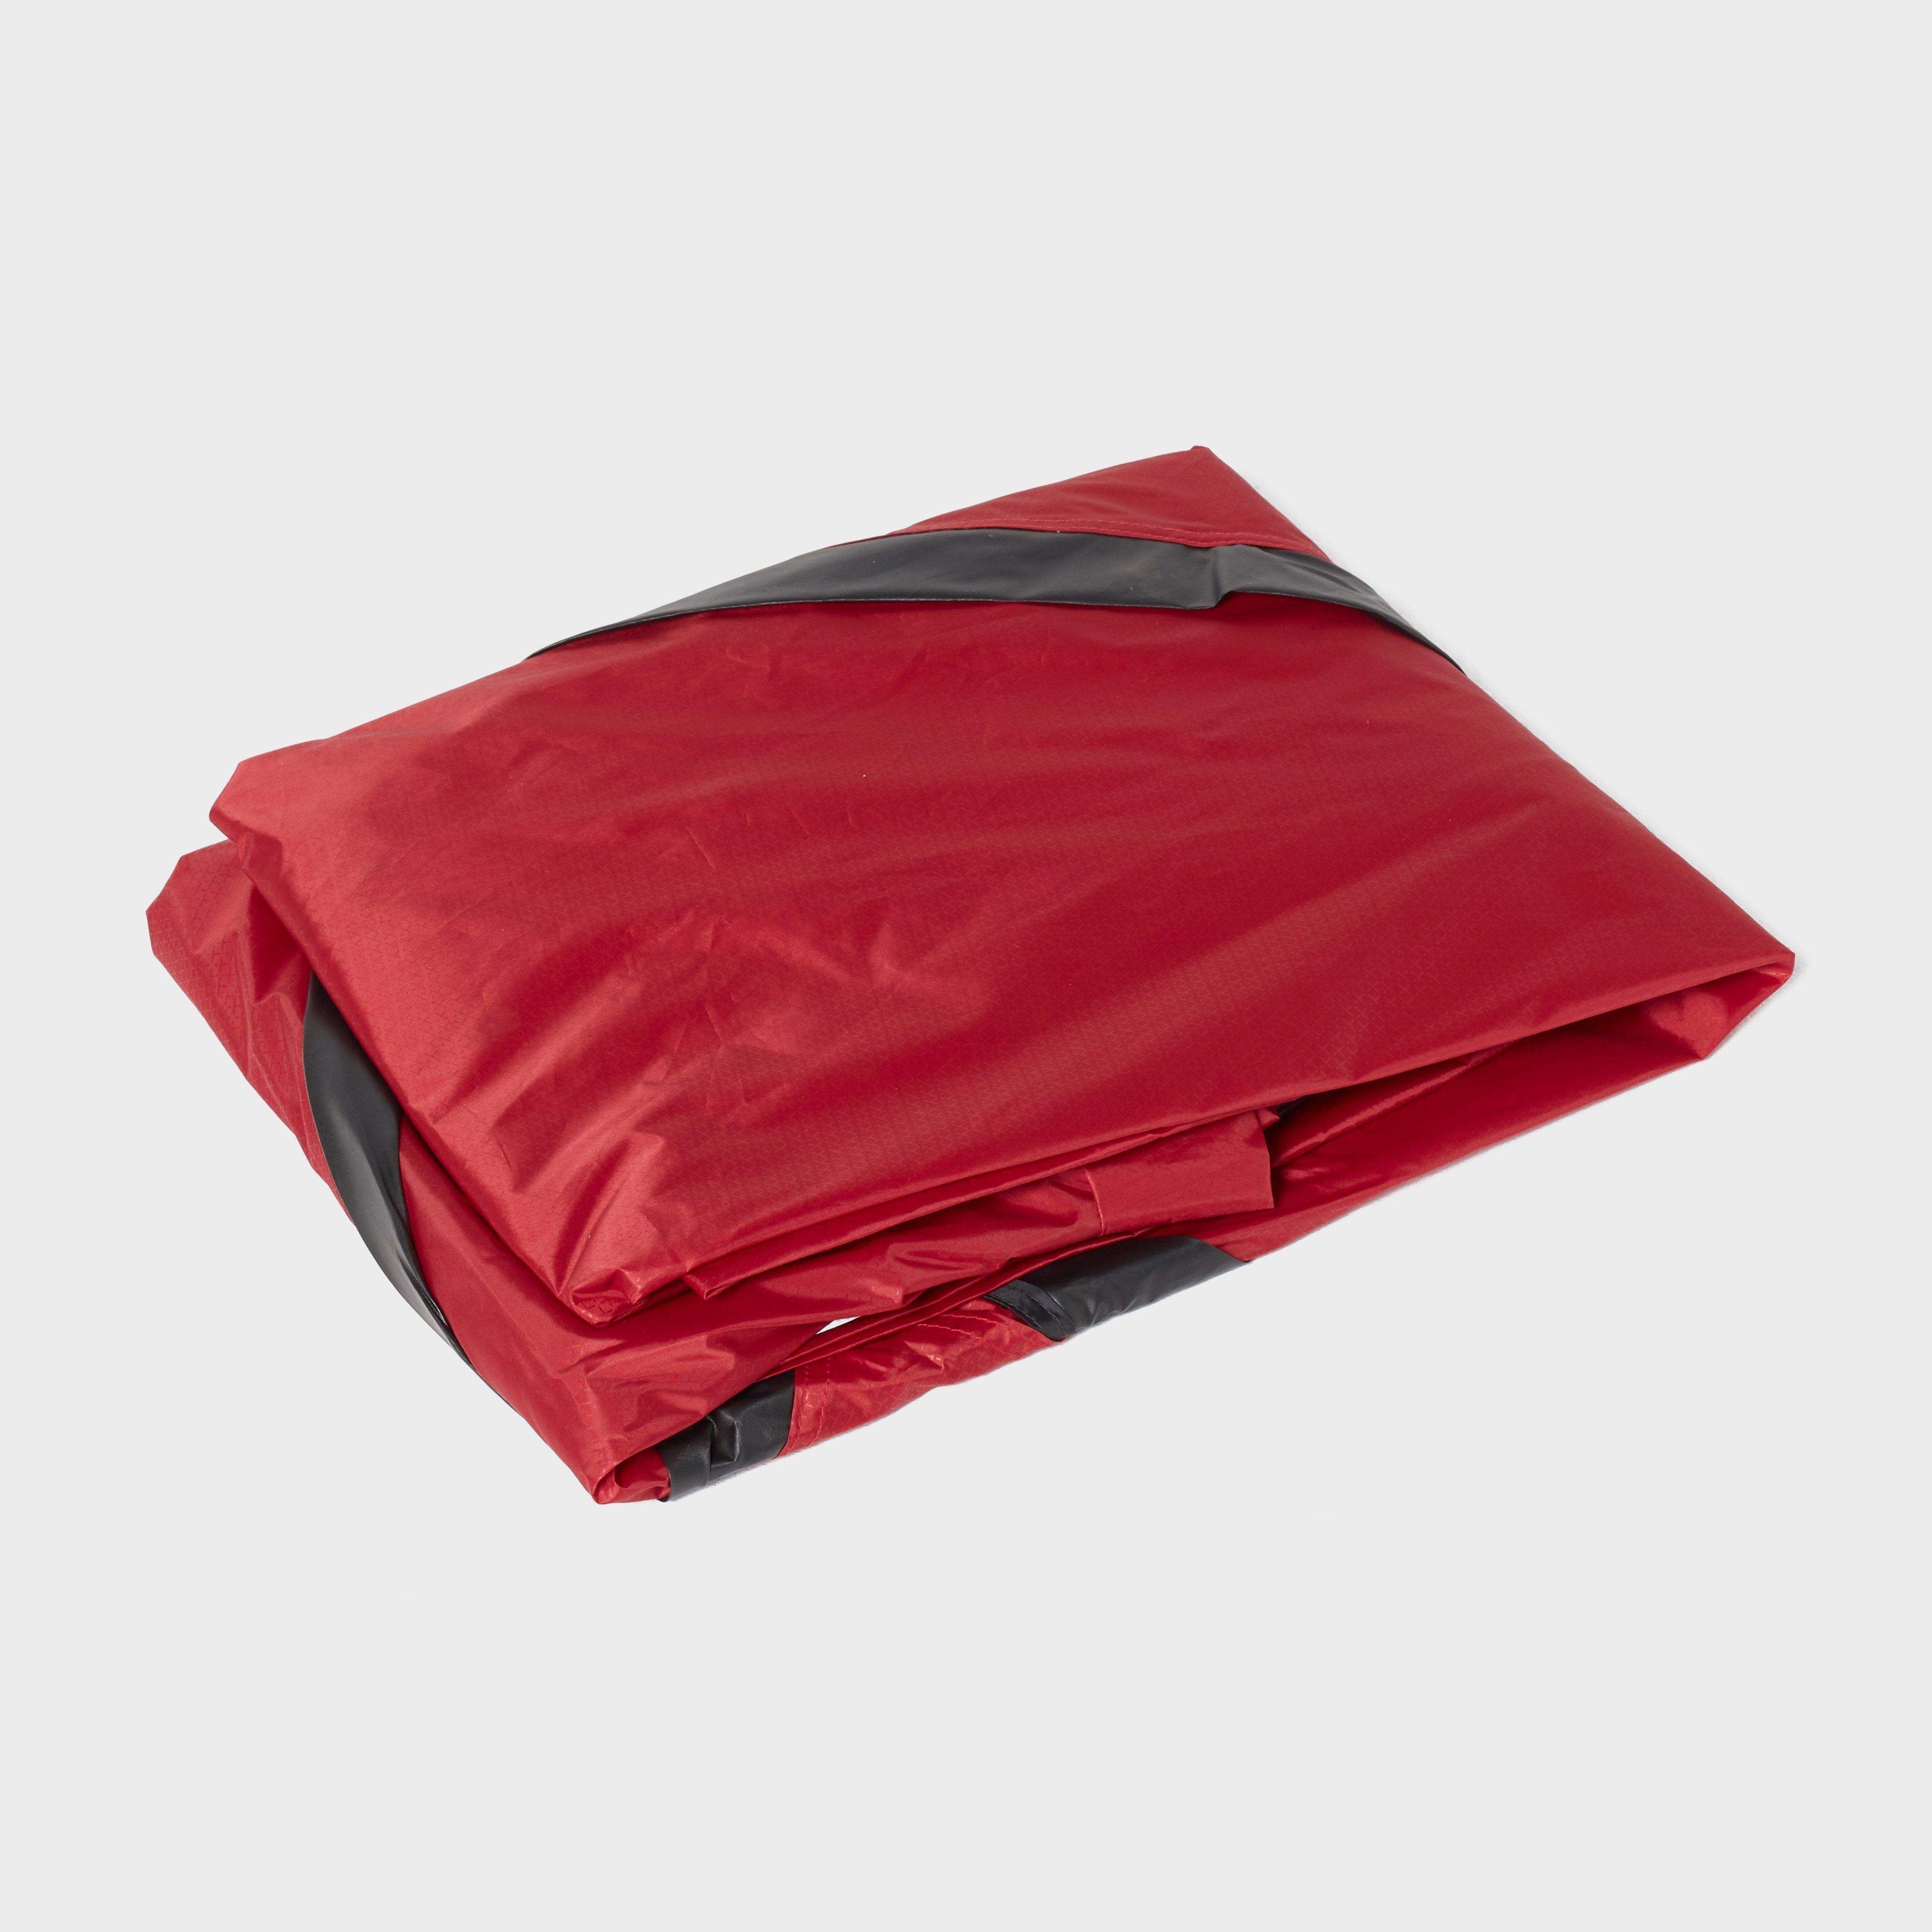 Oex Bandicoot Ii Spare Flysheet - Red/flysheet  Red/flysheet